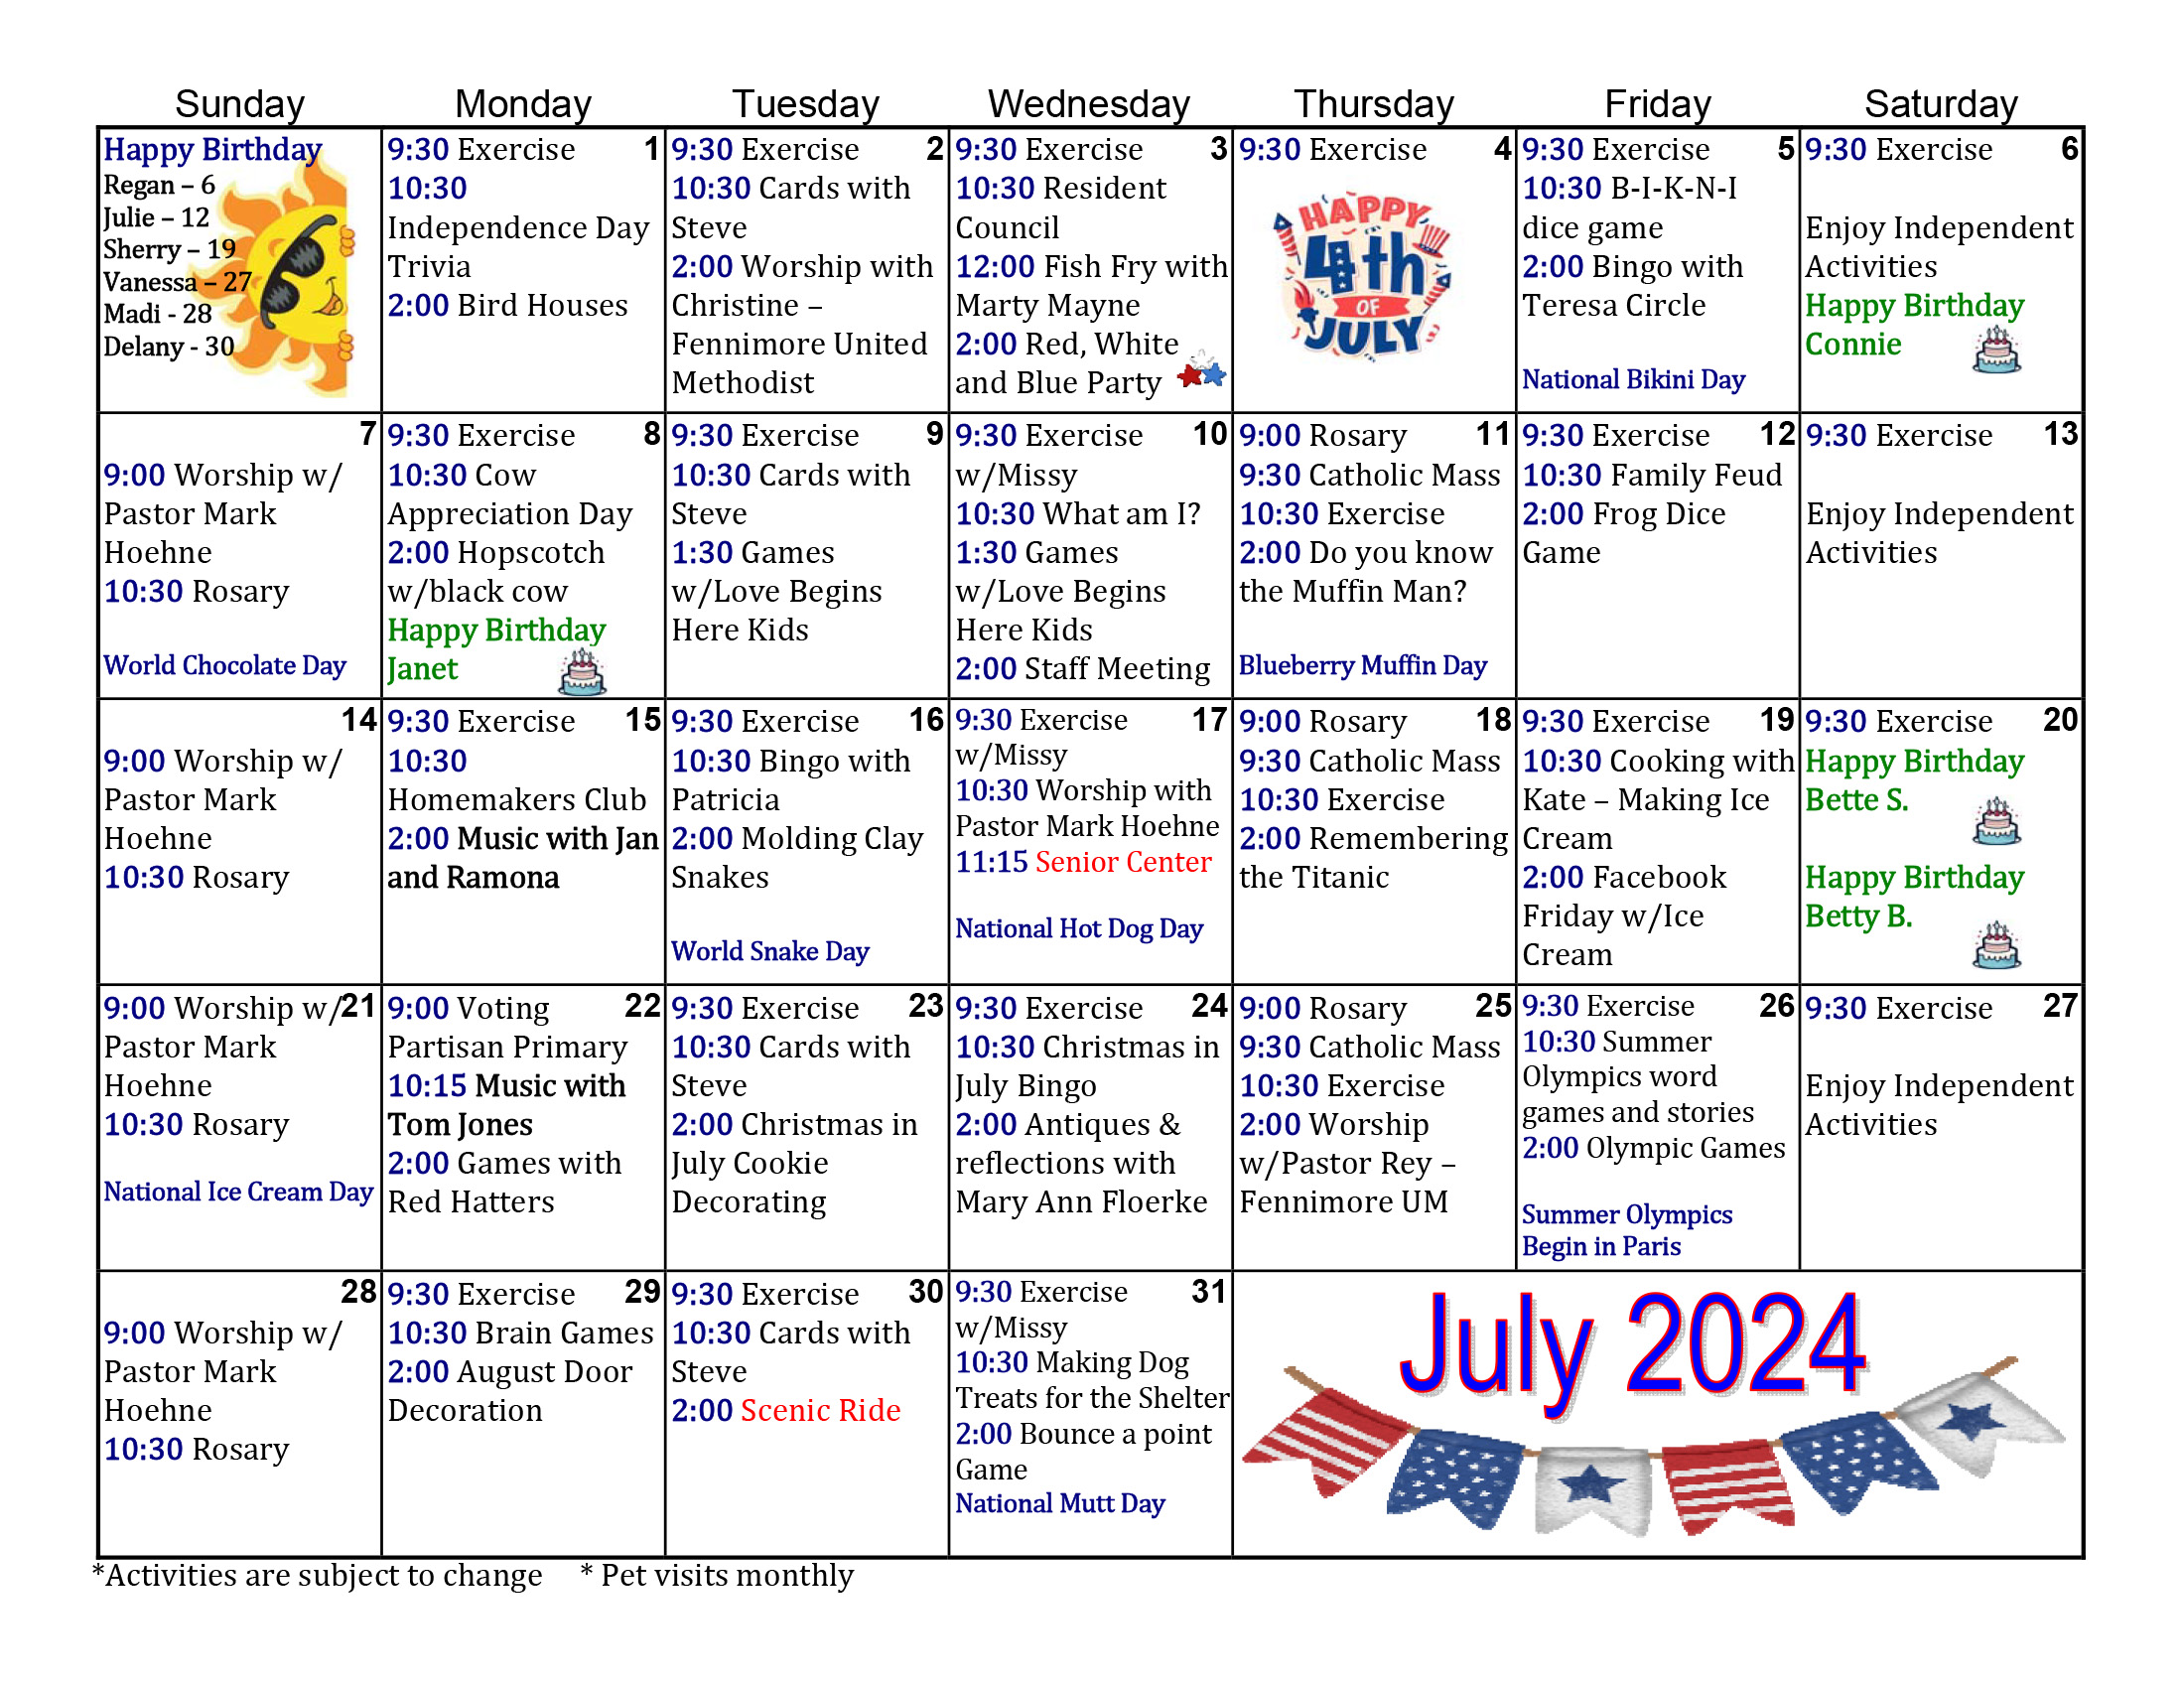 Morningside Assisted Living July calendar